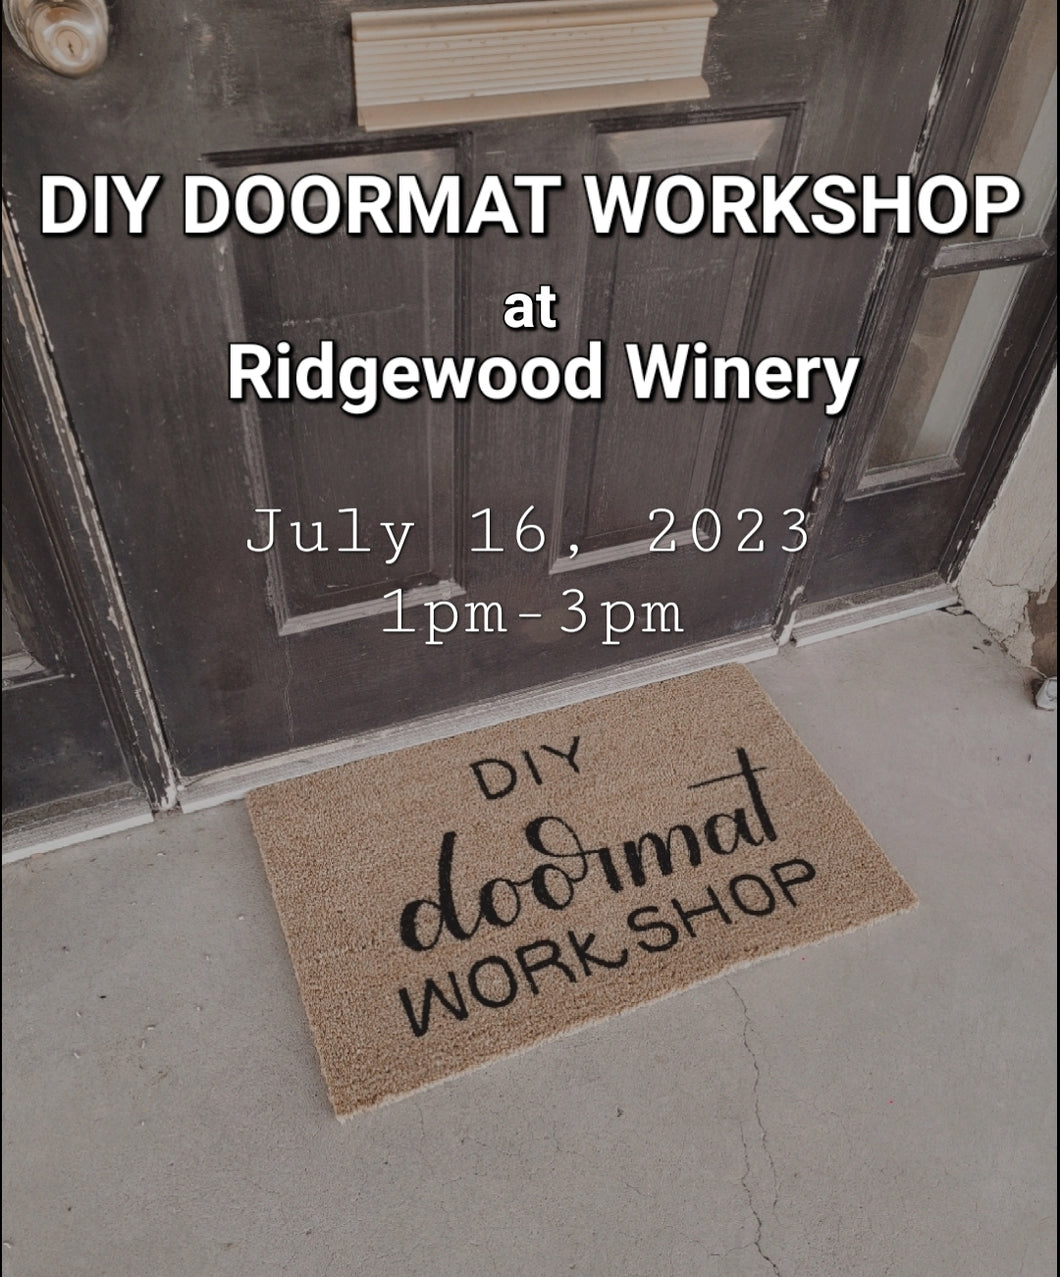 Ridgewood Winery - Doormat Workshop (July 16th, 2023)